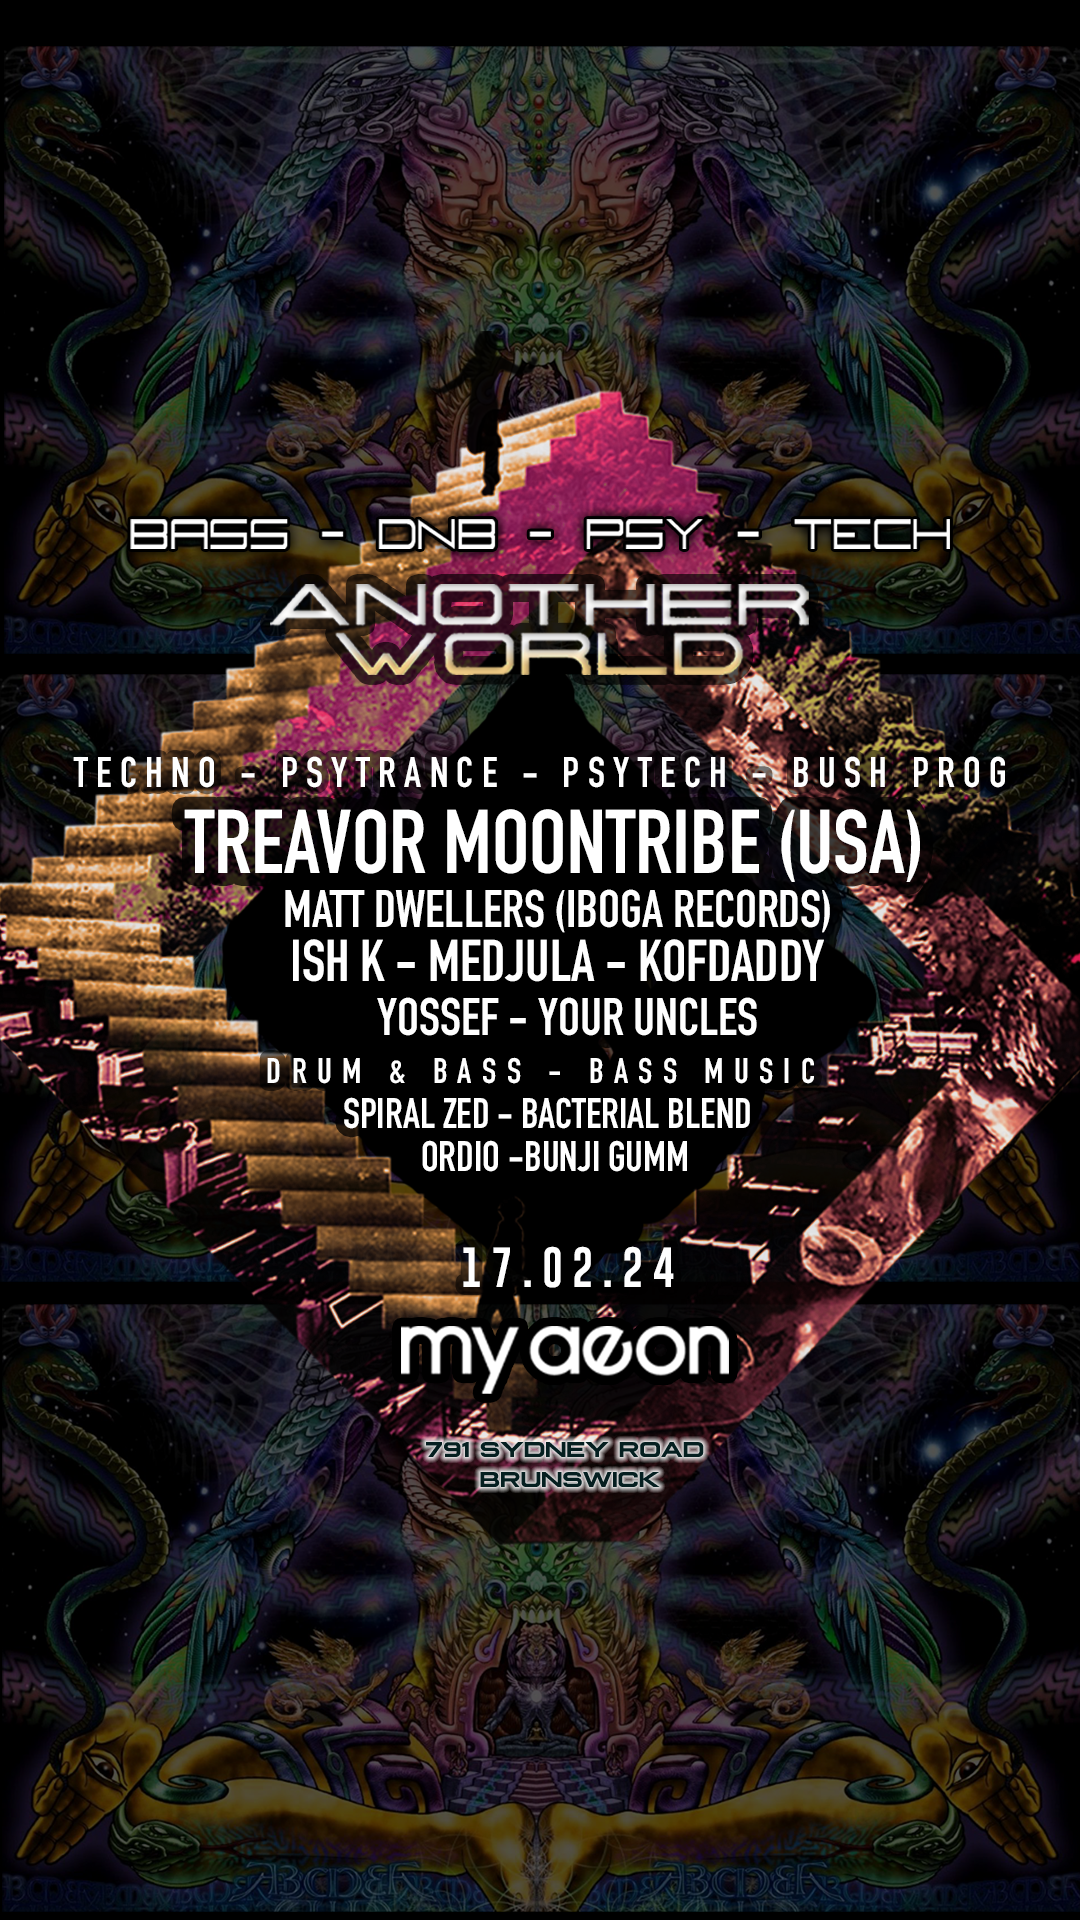 Another World - Treavor Moontribe (USA) ✯ February 17 ✯ Psytrance - DNB - Techno - フライヤー表